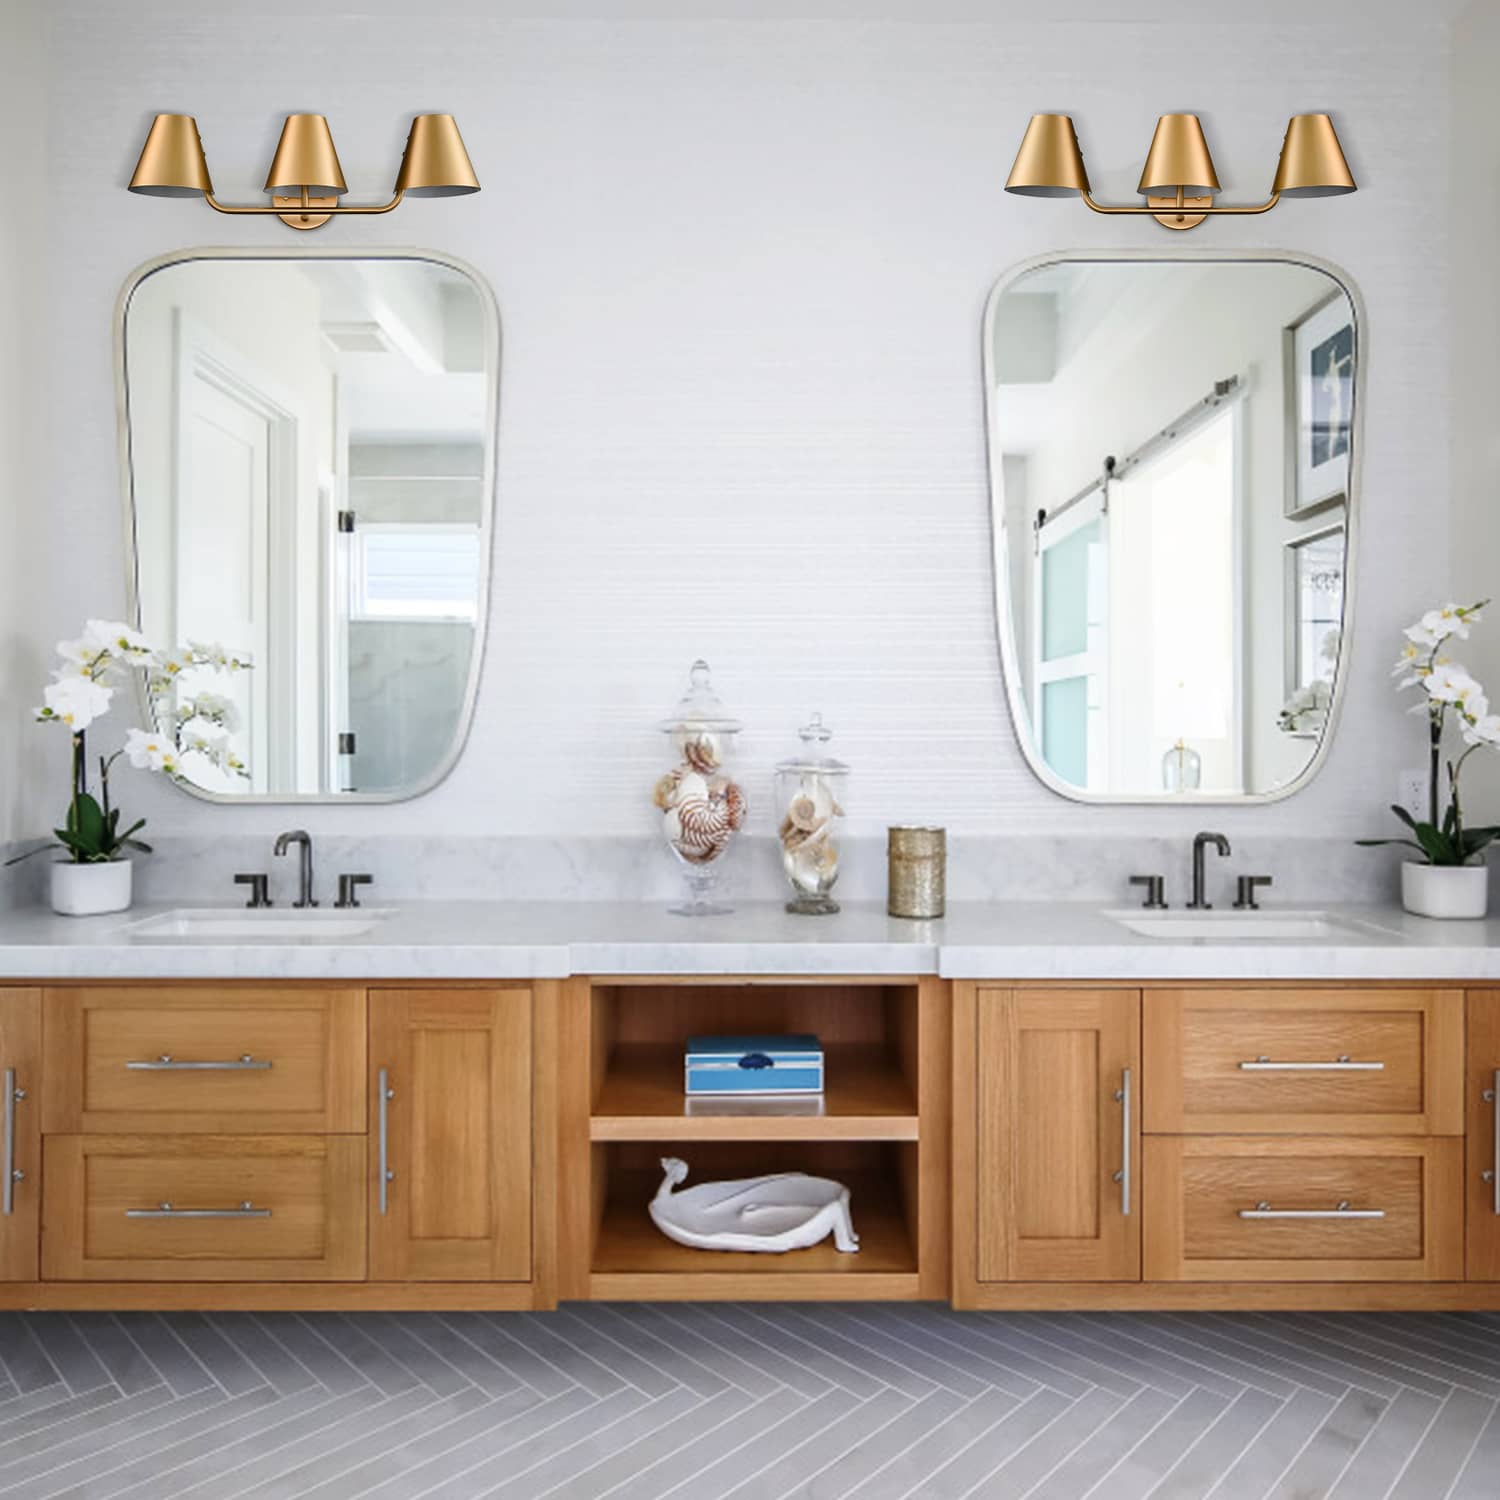 Modern Vanity Lights for Mirror Brass Wall Sconce 3-Light